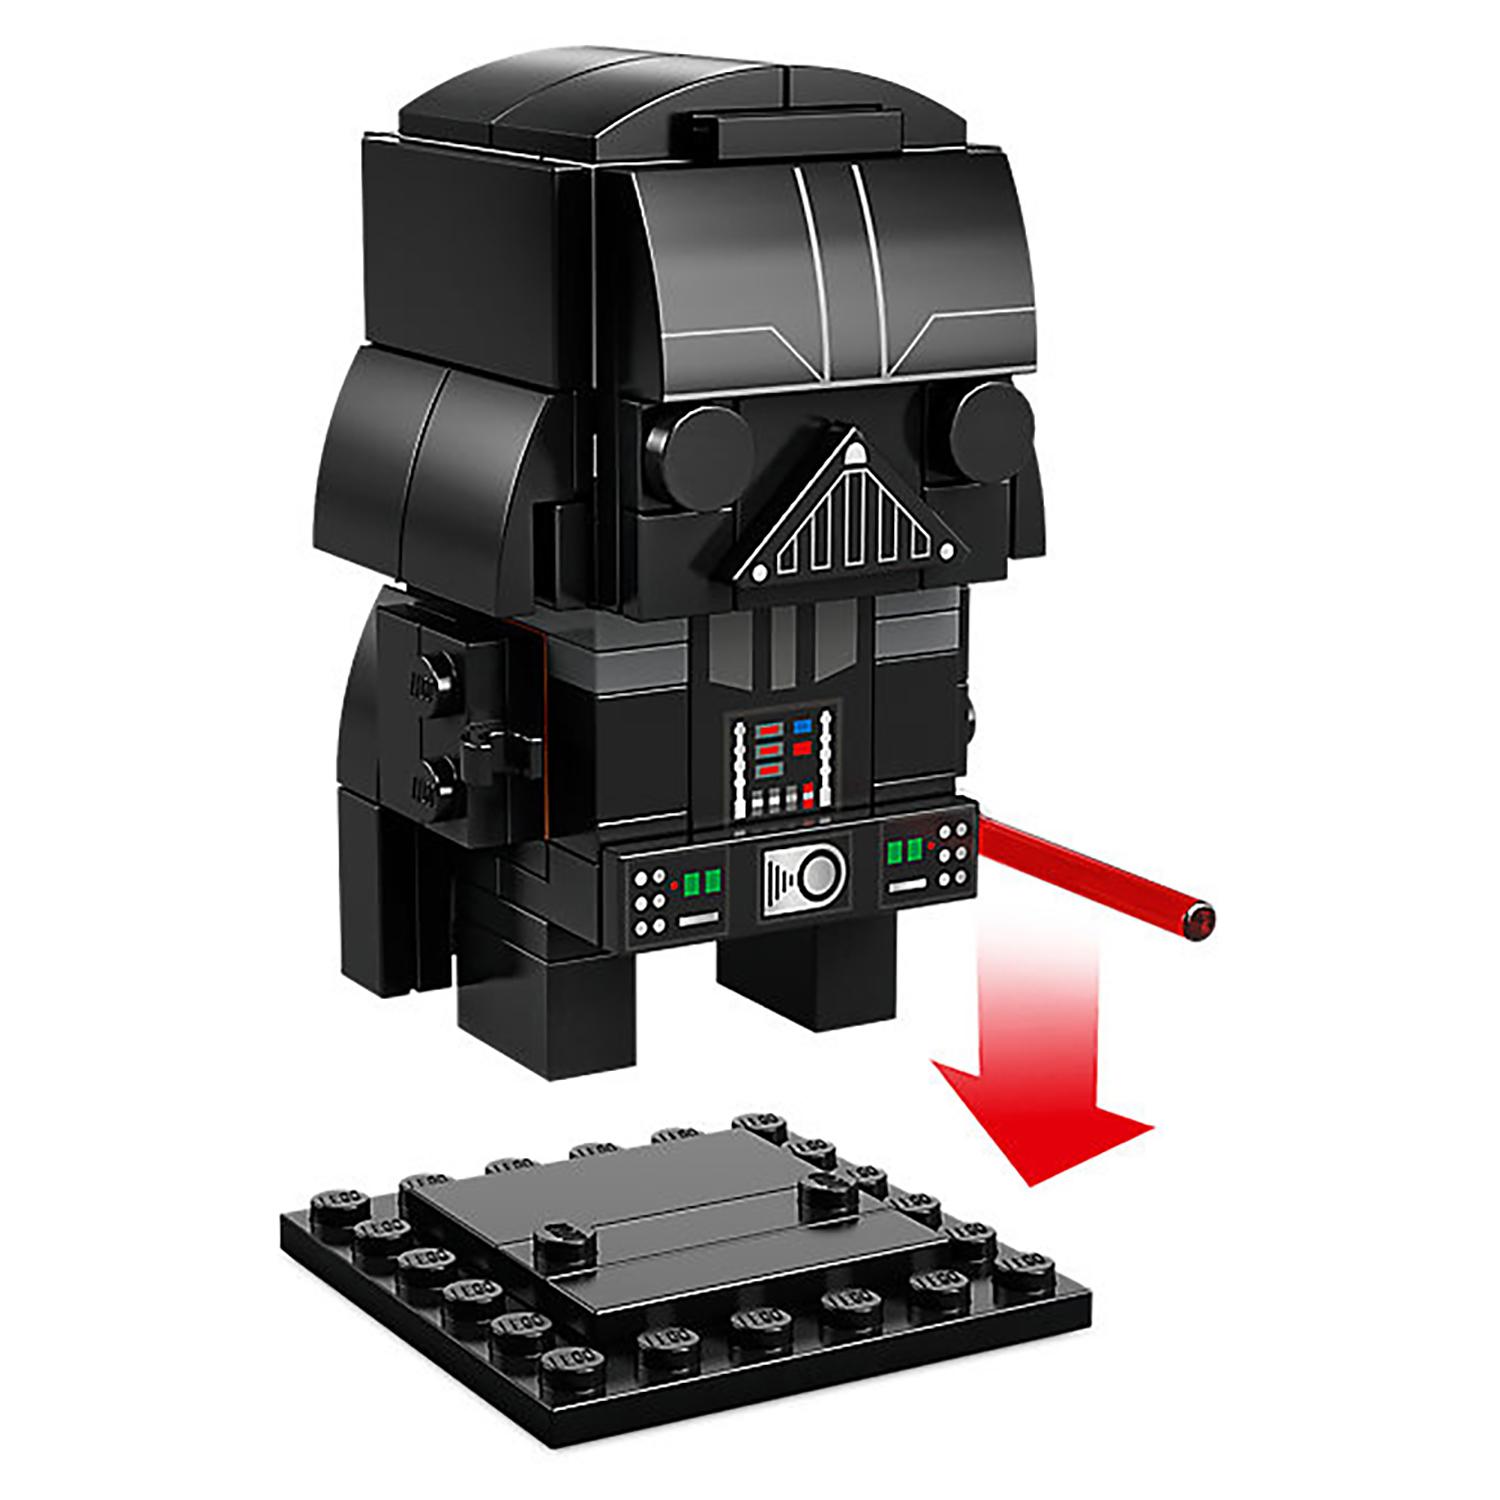 Lego BrickHeadz 41619 Дарт Вейдер